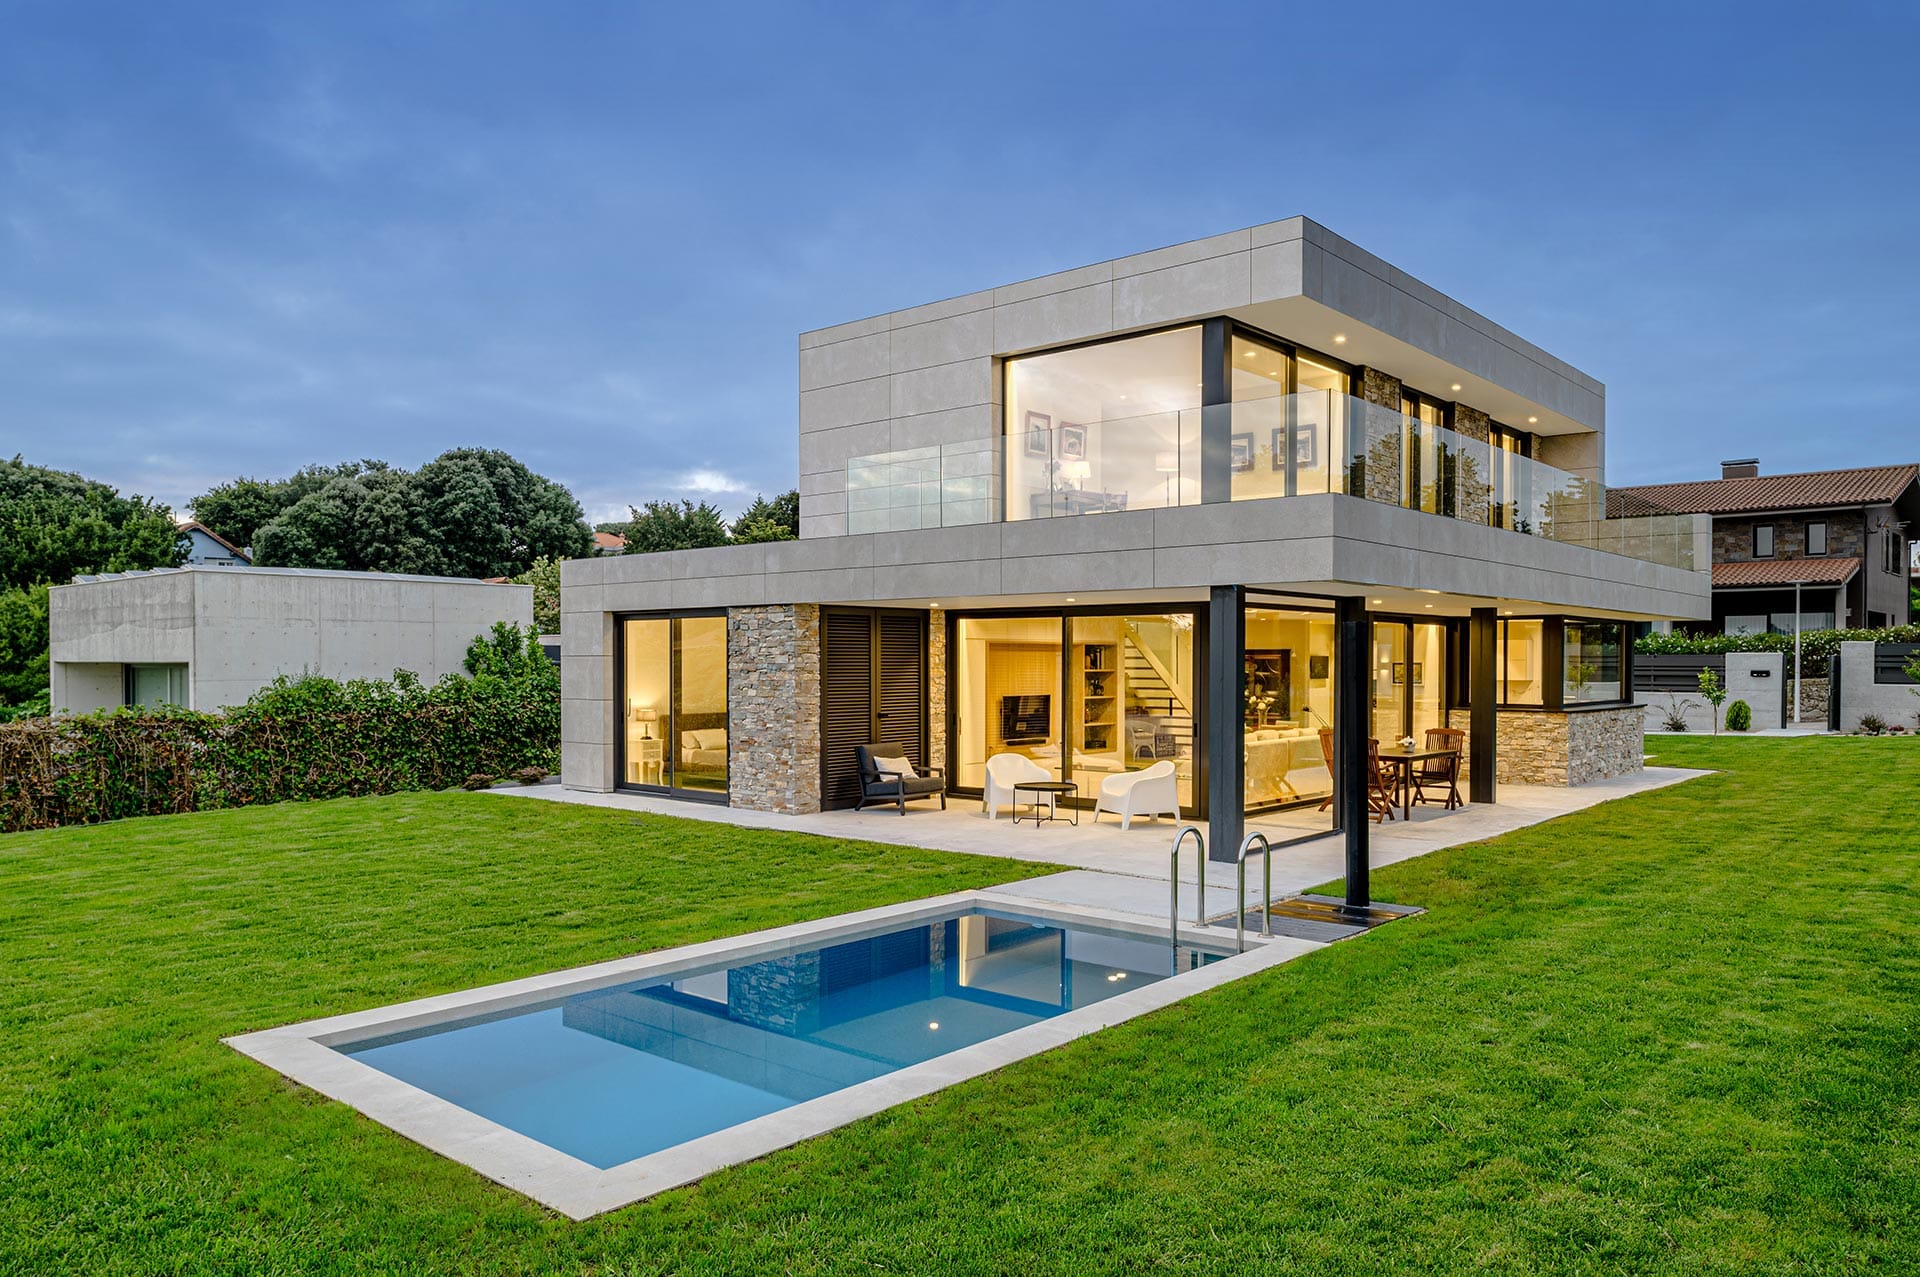 Casa moderna con piscina, porche y grandes cristaleras diseñada por Moah Arquitectos en Somo. Cantabria